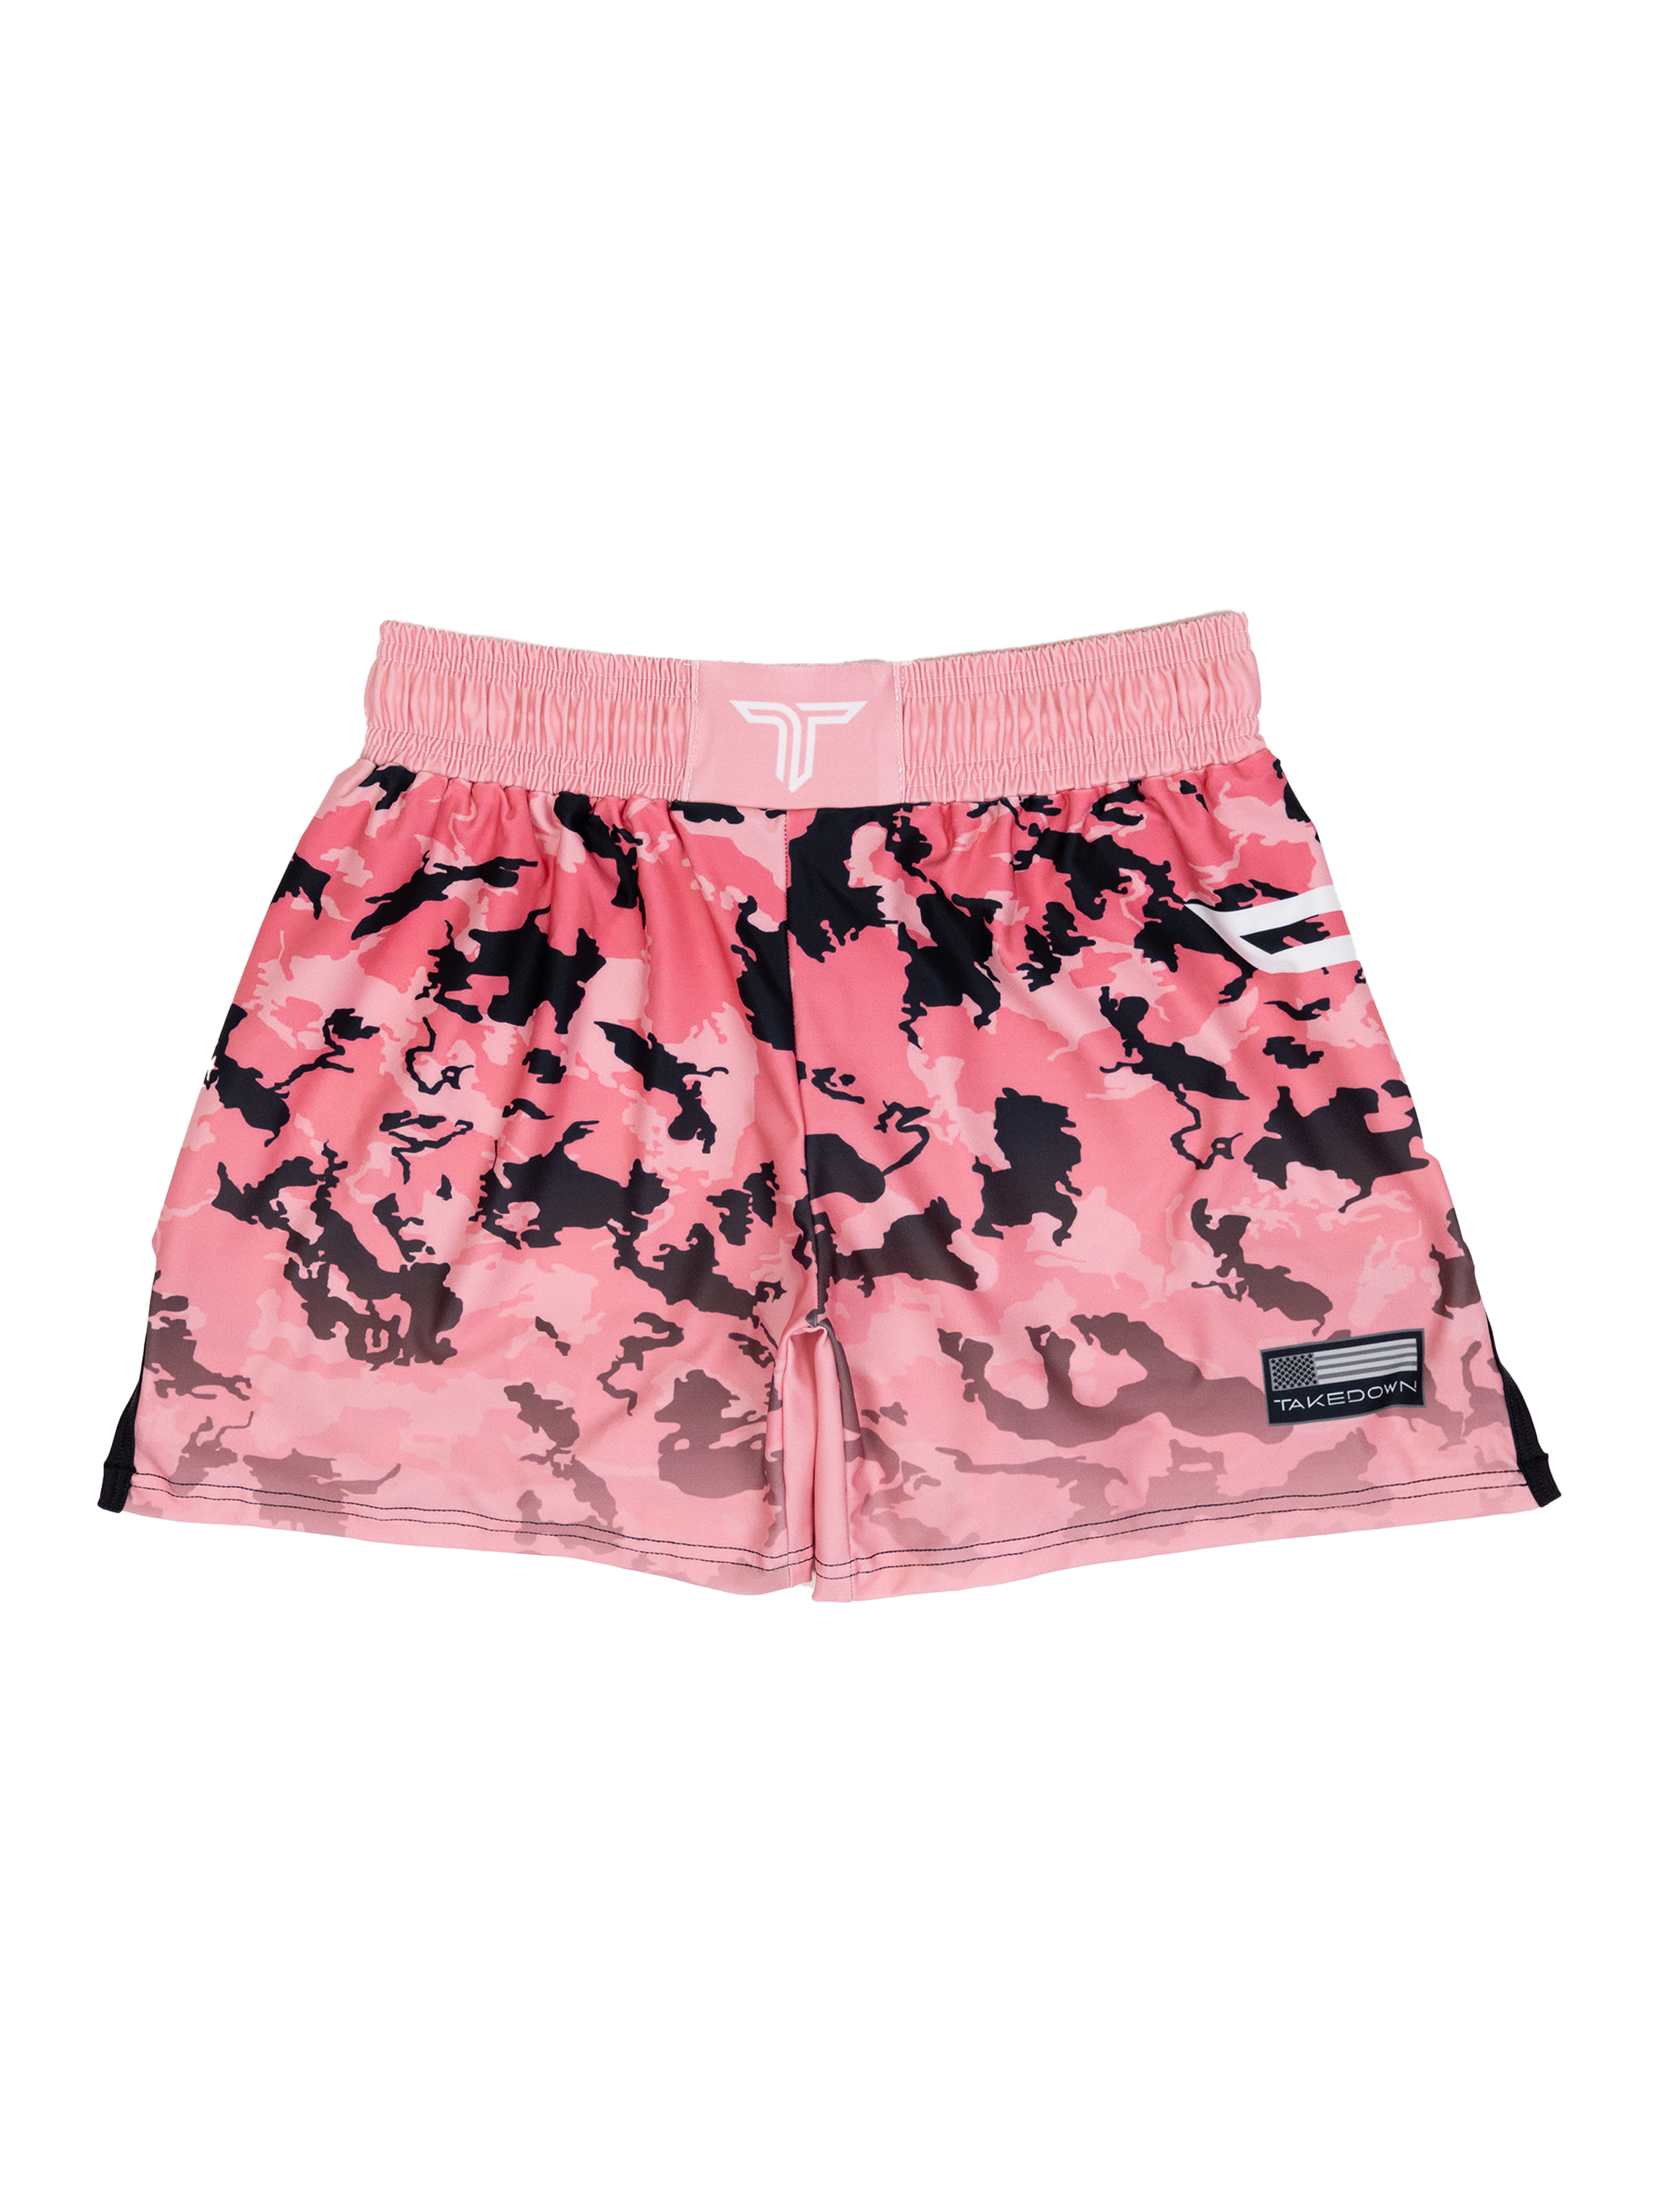 Particle Camo Women's Fight Shorts - Malibu Pink (3